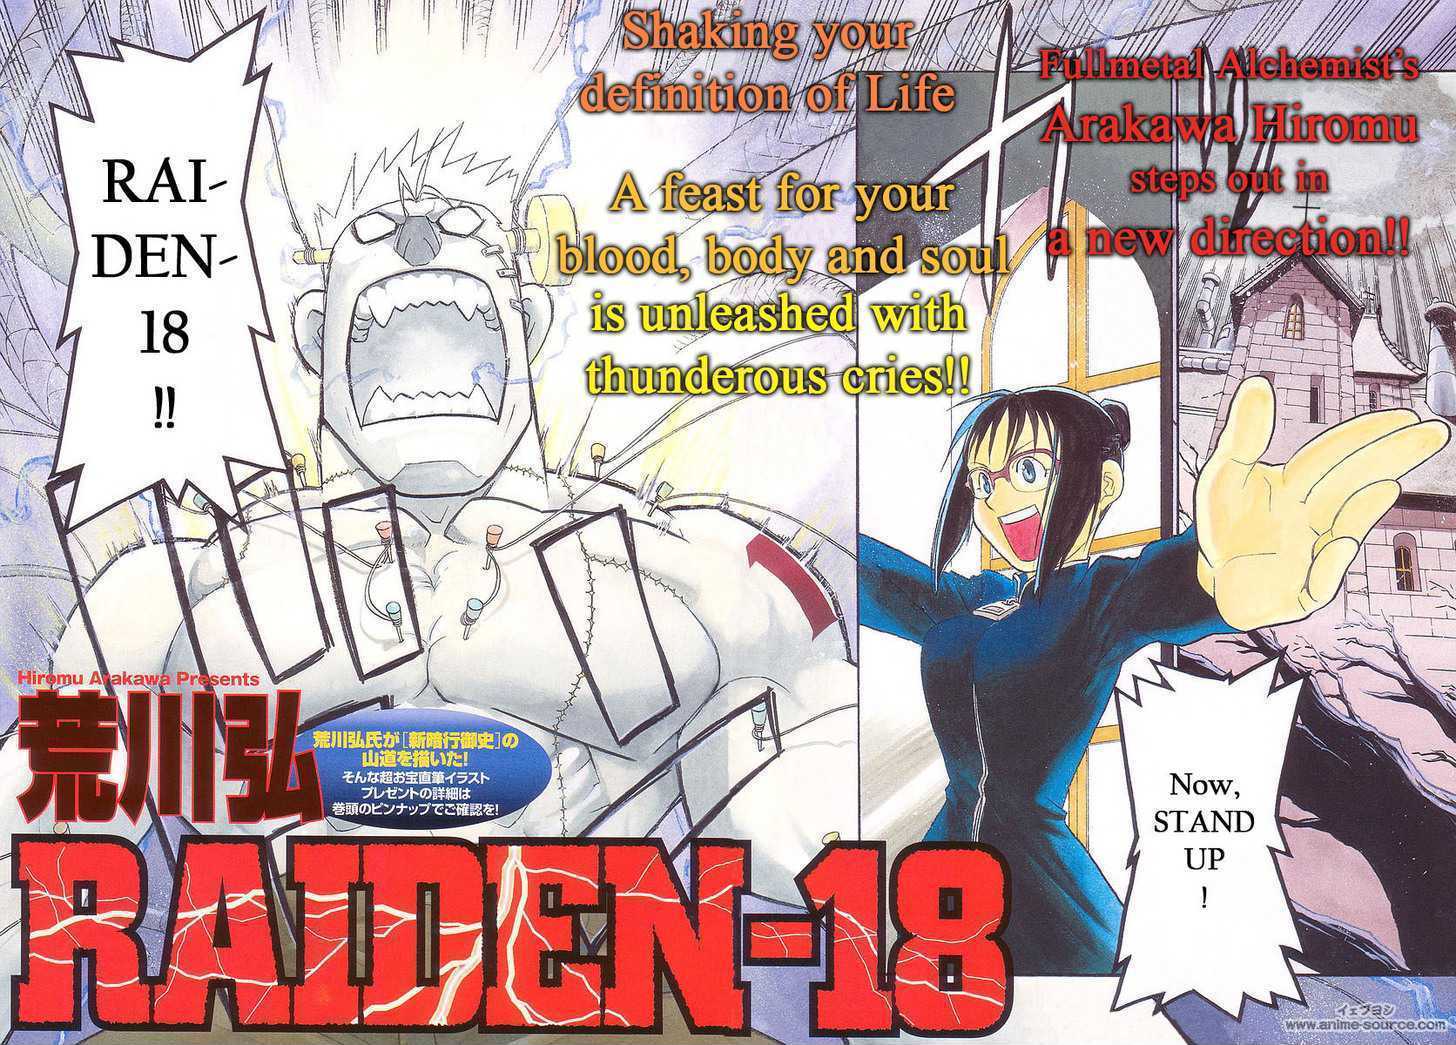 Raiden-18 Vol.1 Chapter 1 - Picture 2